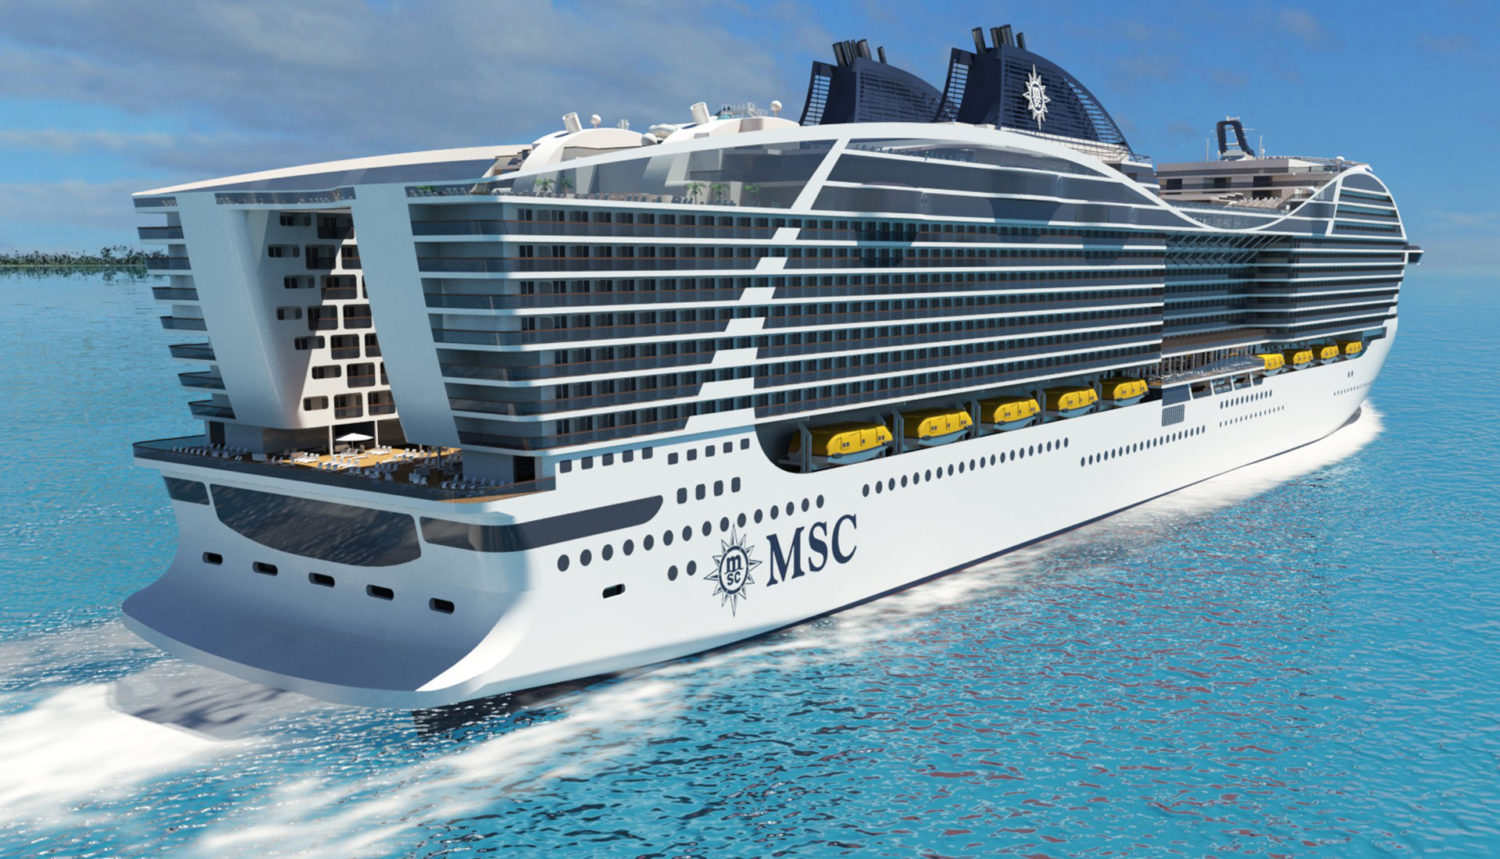 msc cruise ships from orlando